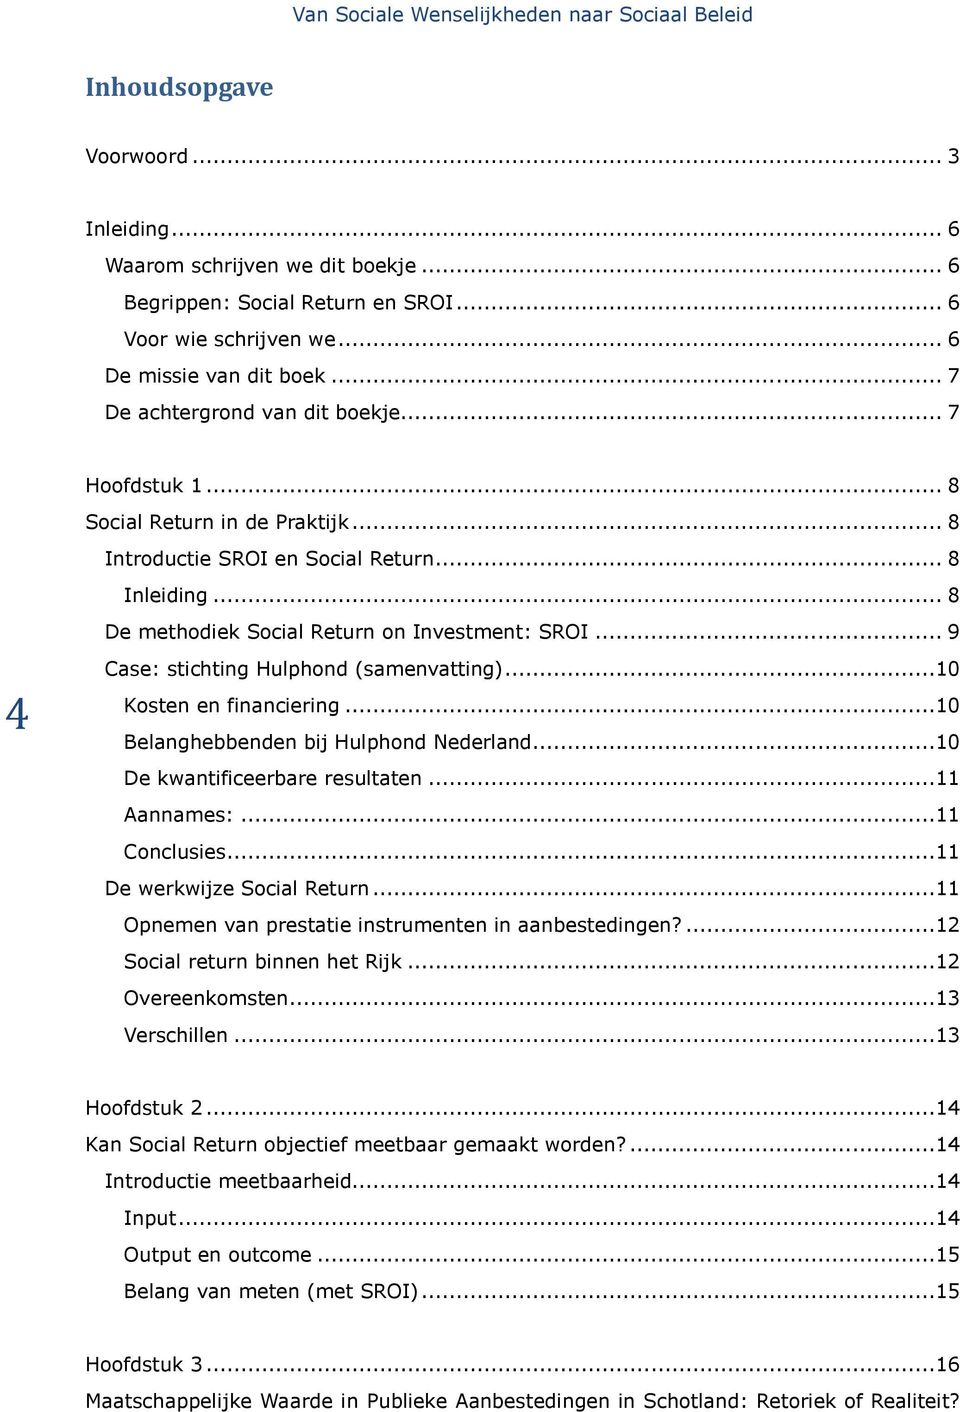 .. 8 De methodiek Social Return on Investment: SROI... 9 4 Case: stichting Hulphond (samenvatting)...10 Kosten en financiering...10 Belanghebbenden bij Hulphond Nederland.